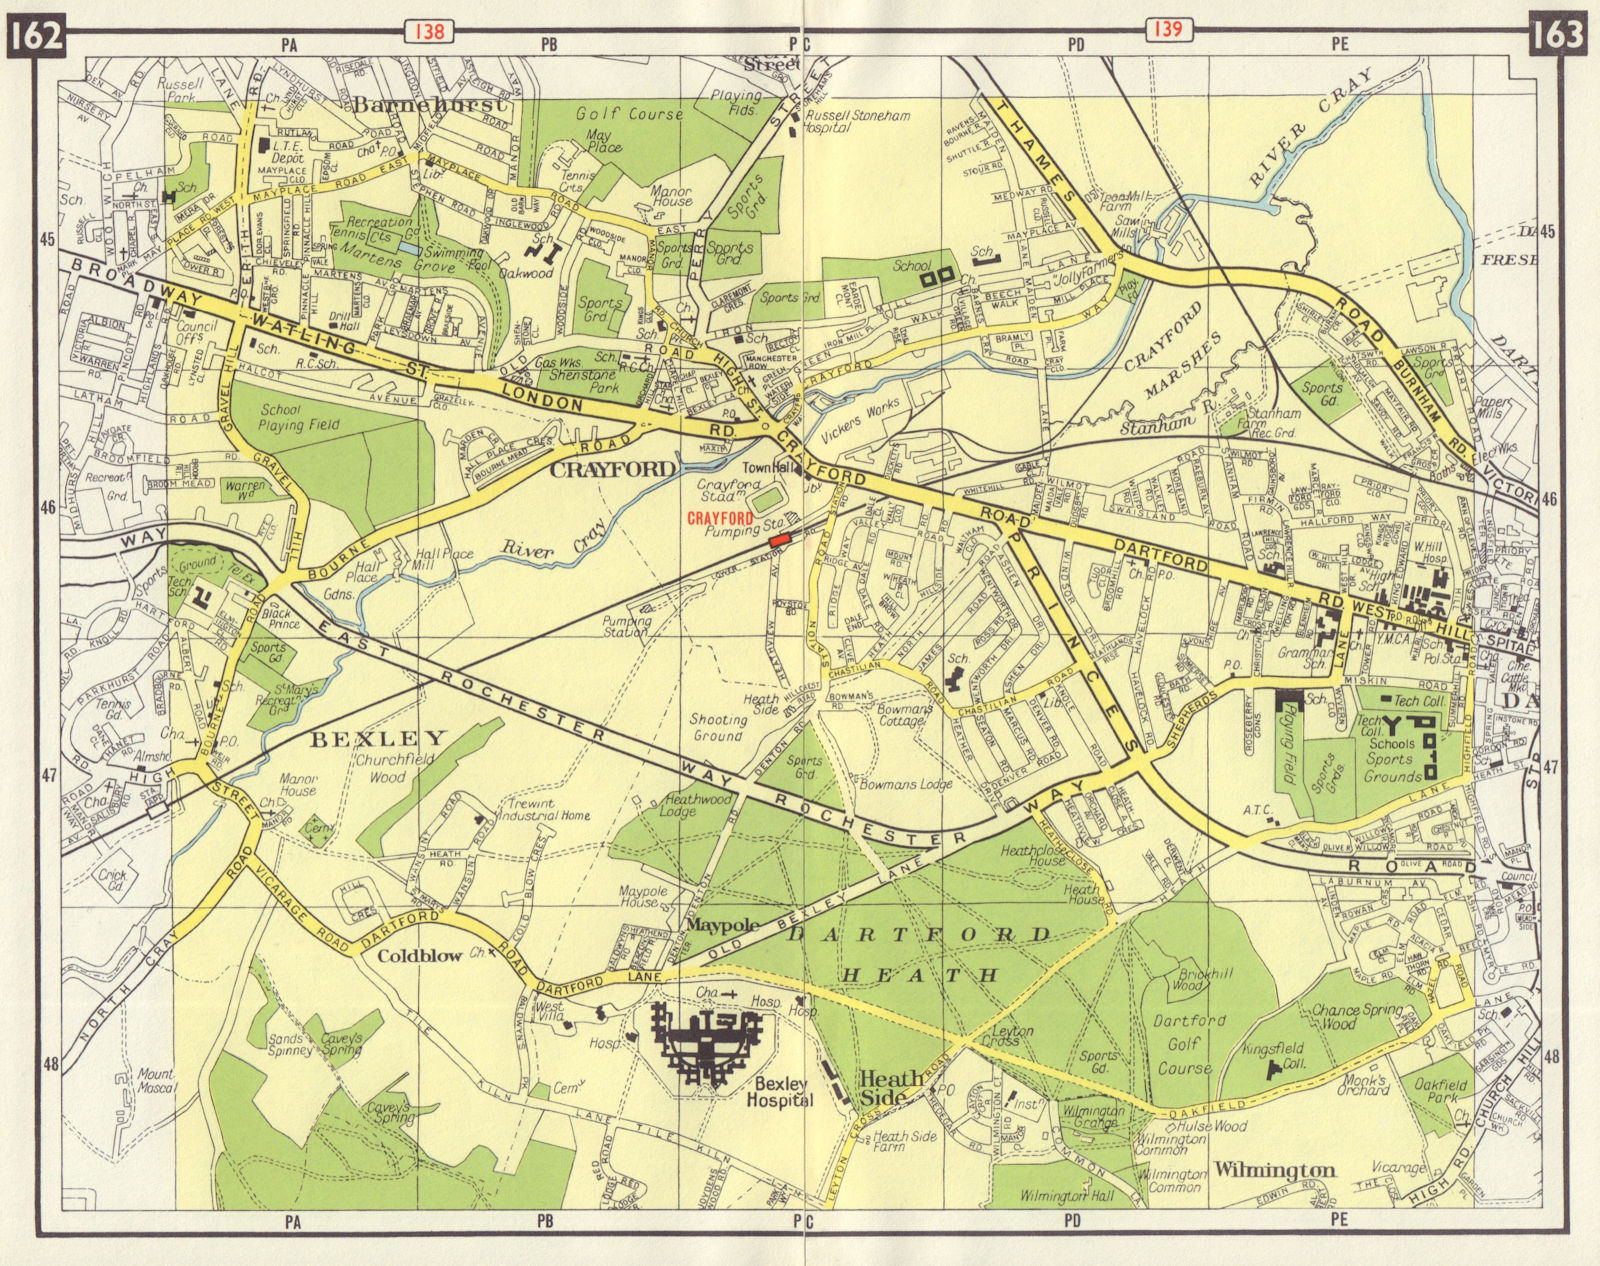 SE LONDON Crayford Wilmington Dartford Heath Bexley Barnehurst Dartford 1965 map